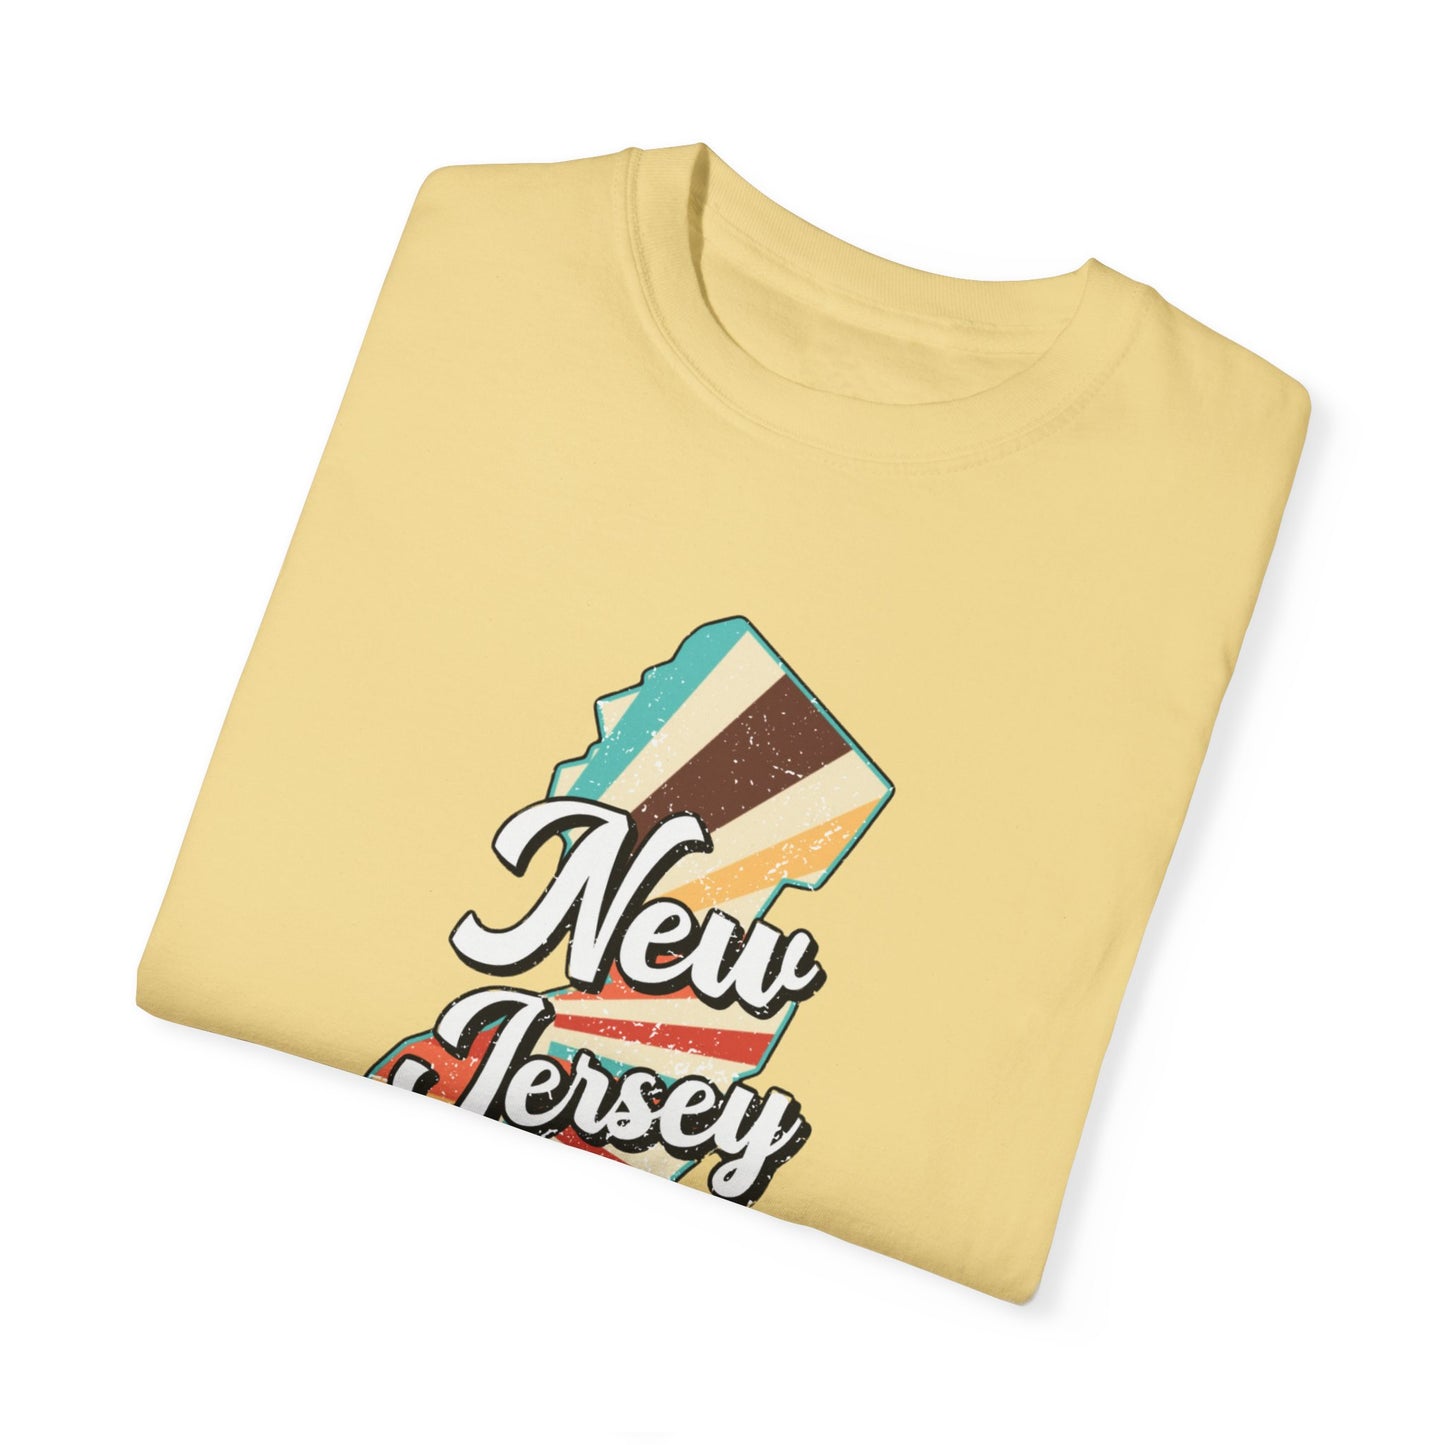 Retro New Jersey Comfort Colors Tshirt